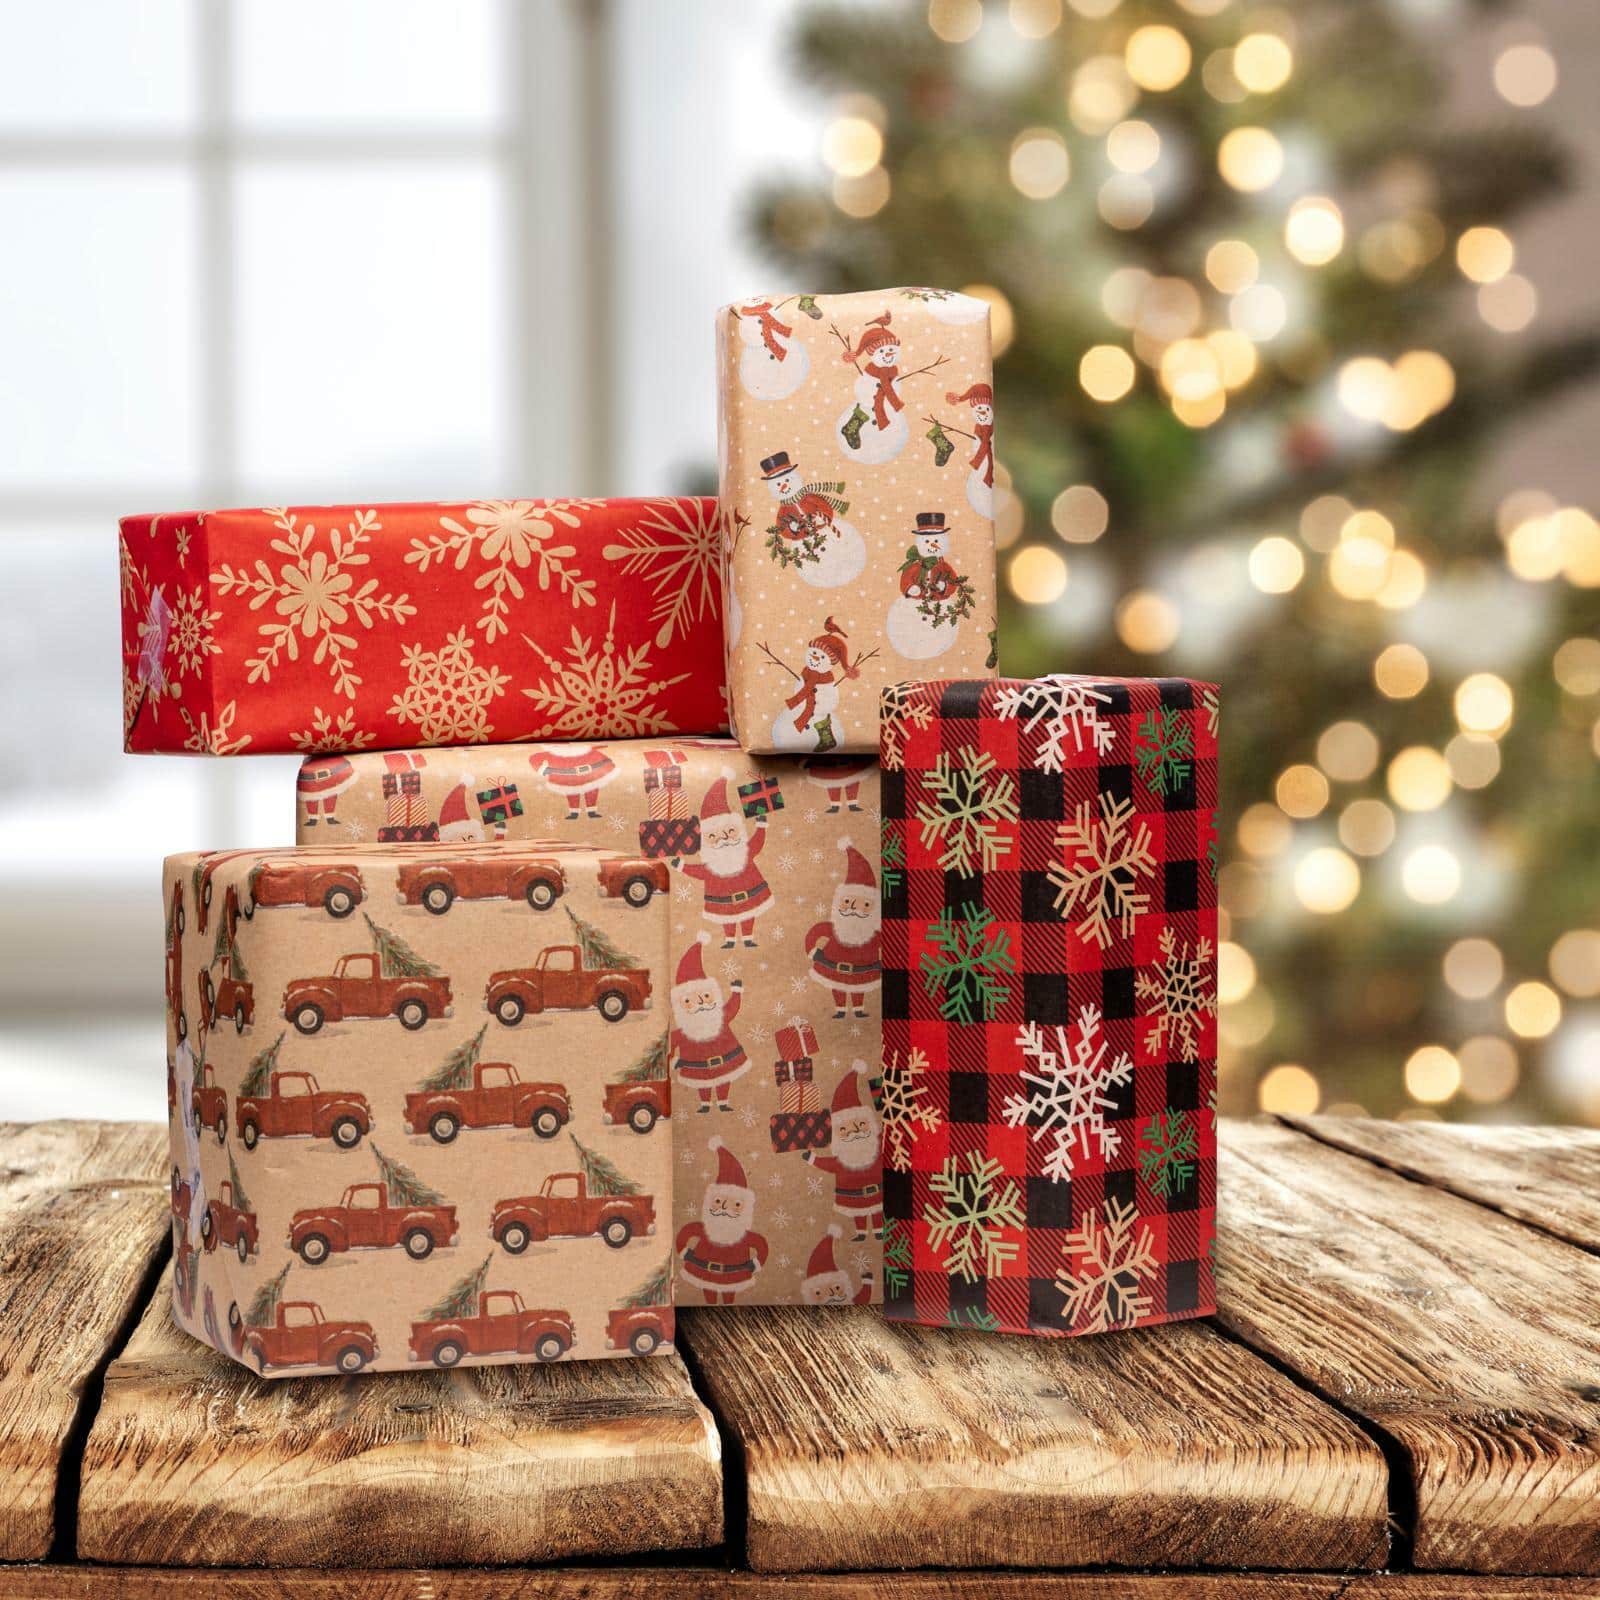 Kraft Gift Wrap Paper by Celebrate It™